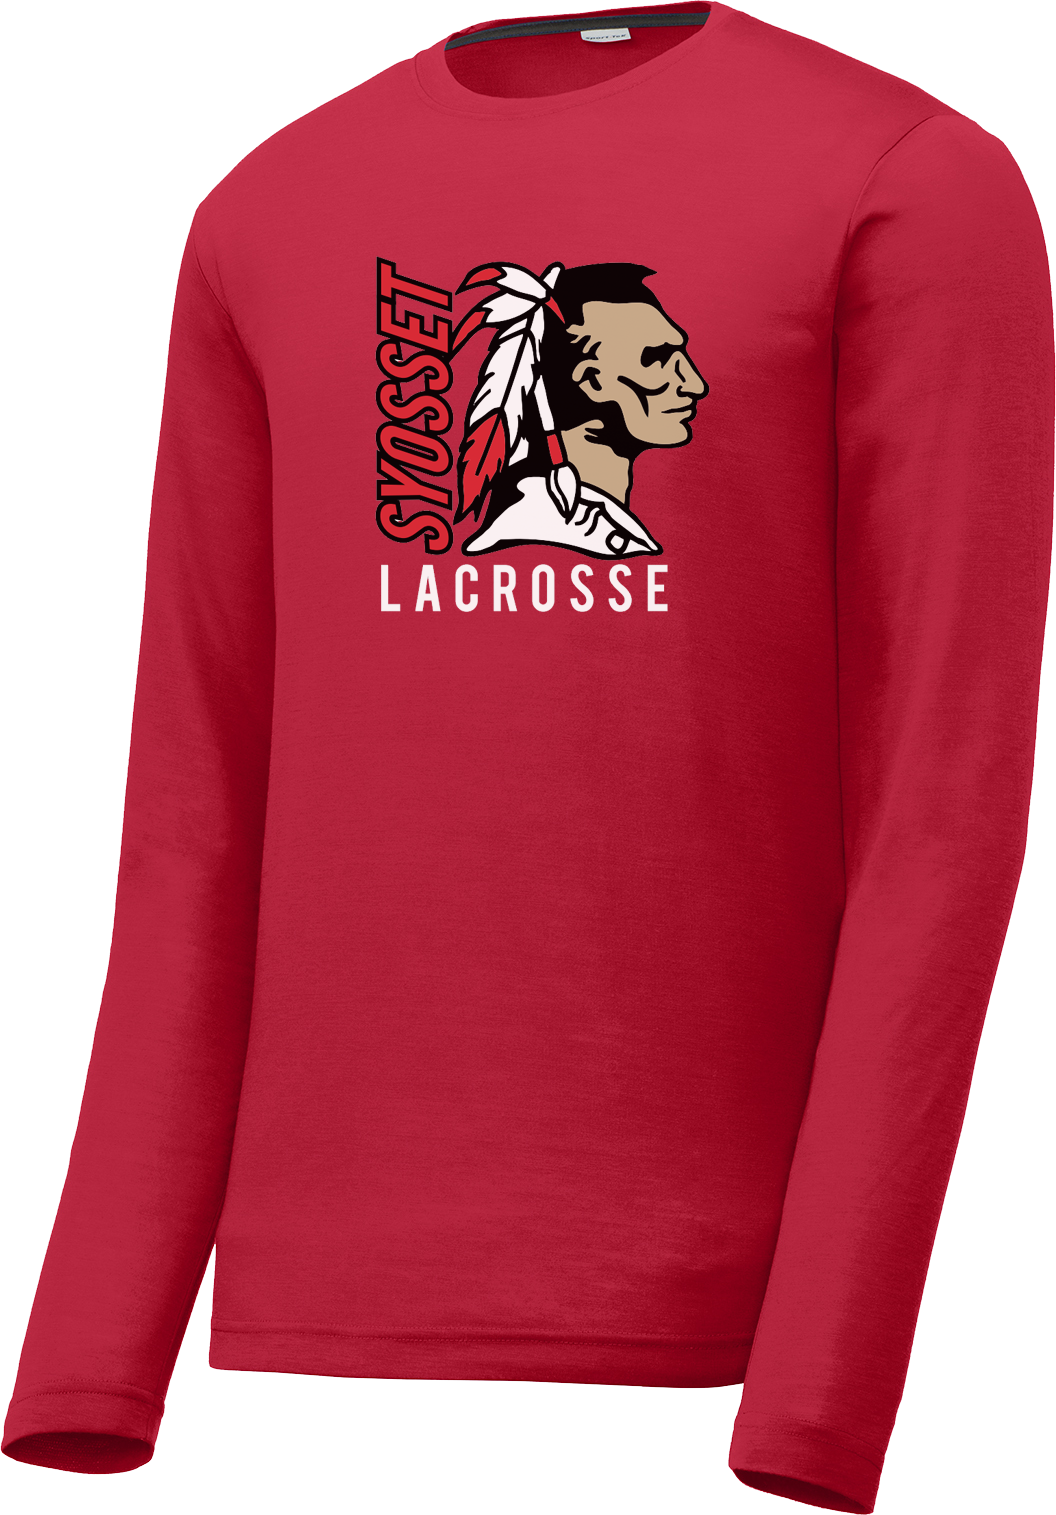 Syosset Lacrosse Long Sleeve CottonTouch Performance Shirt